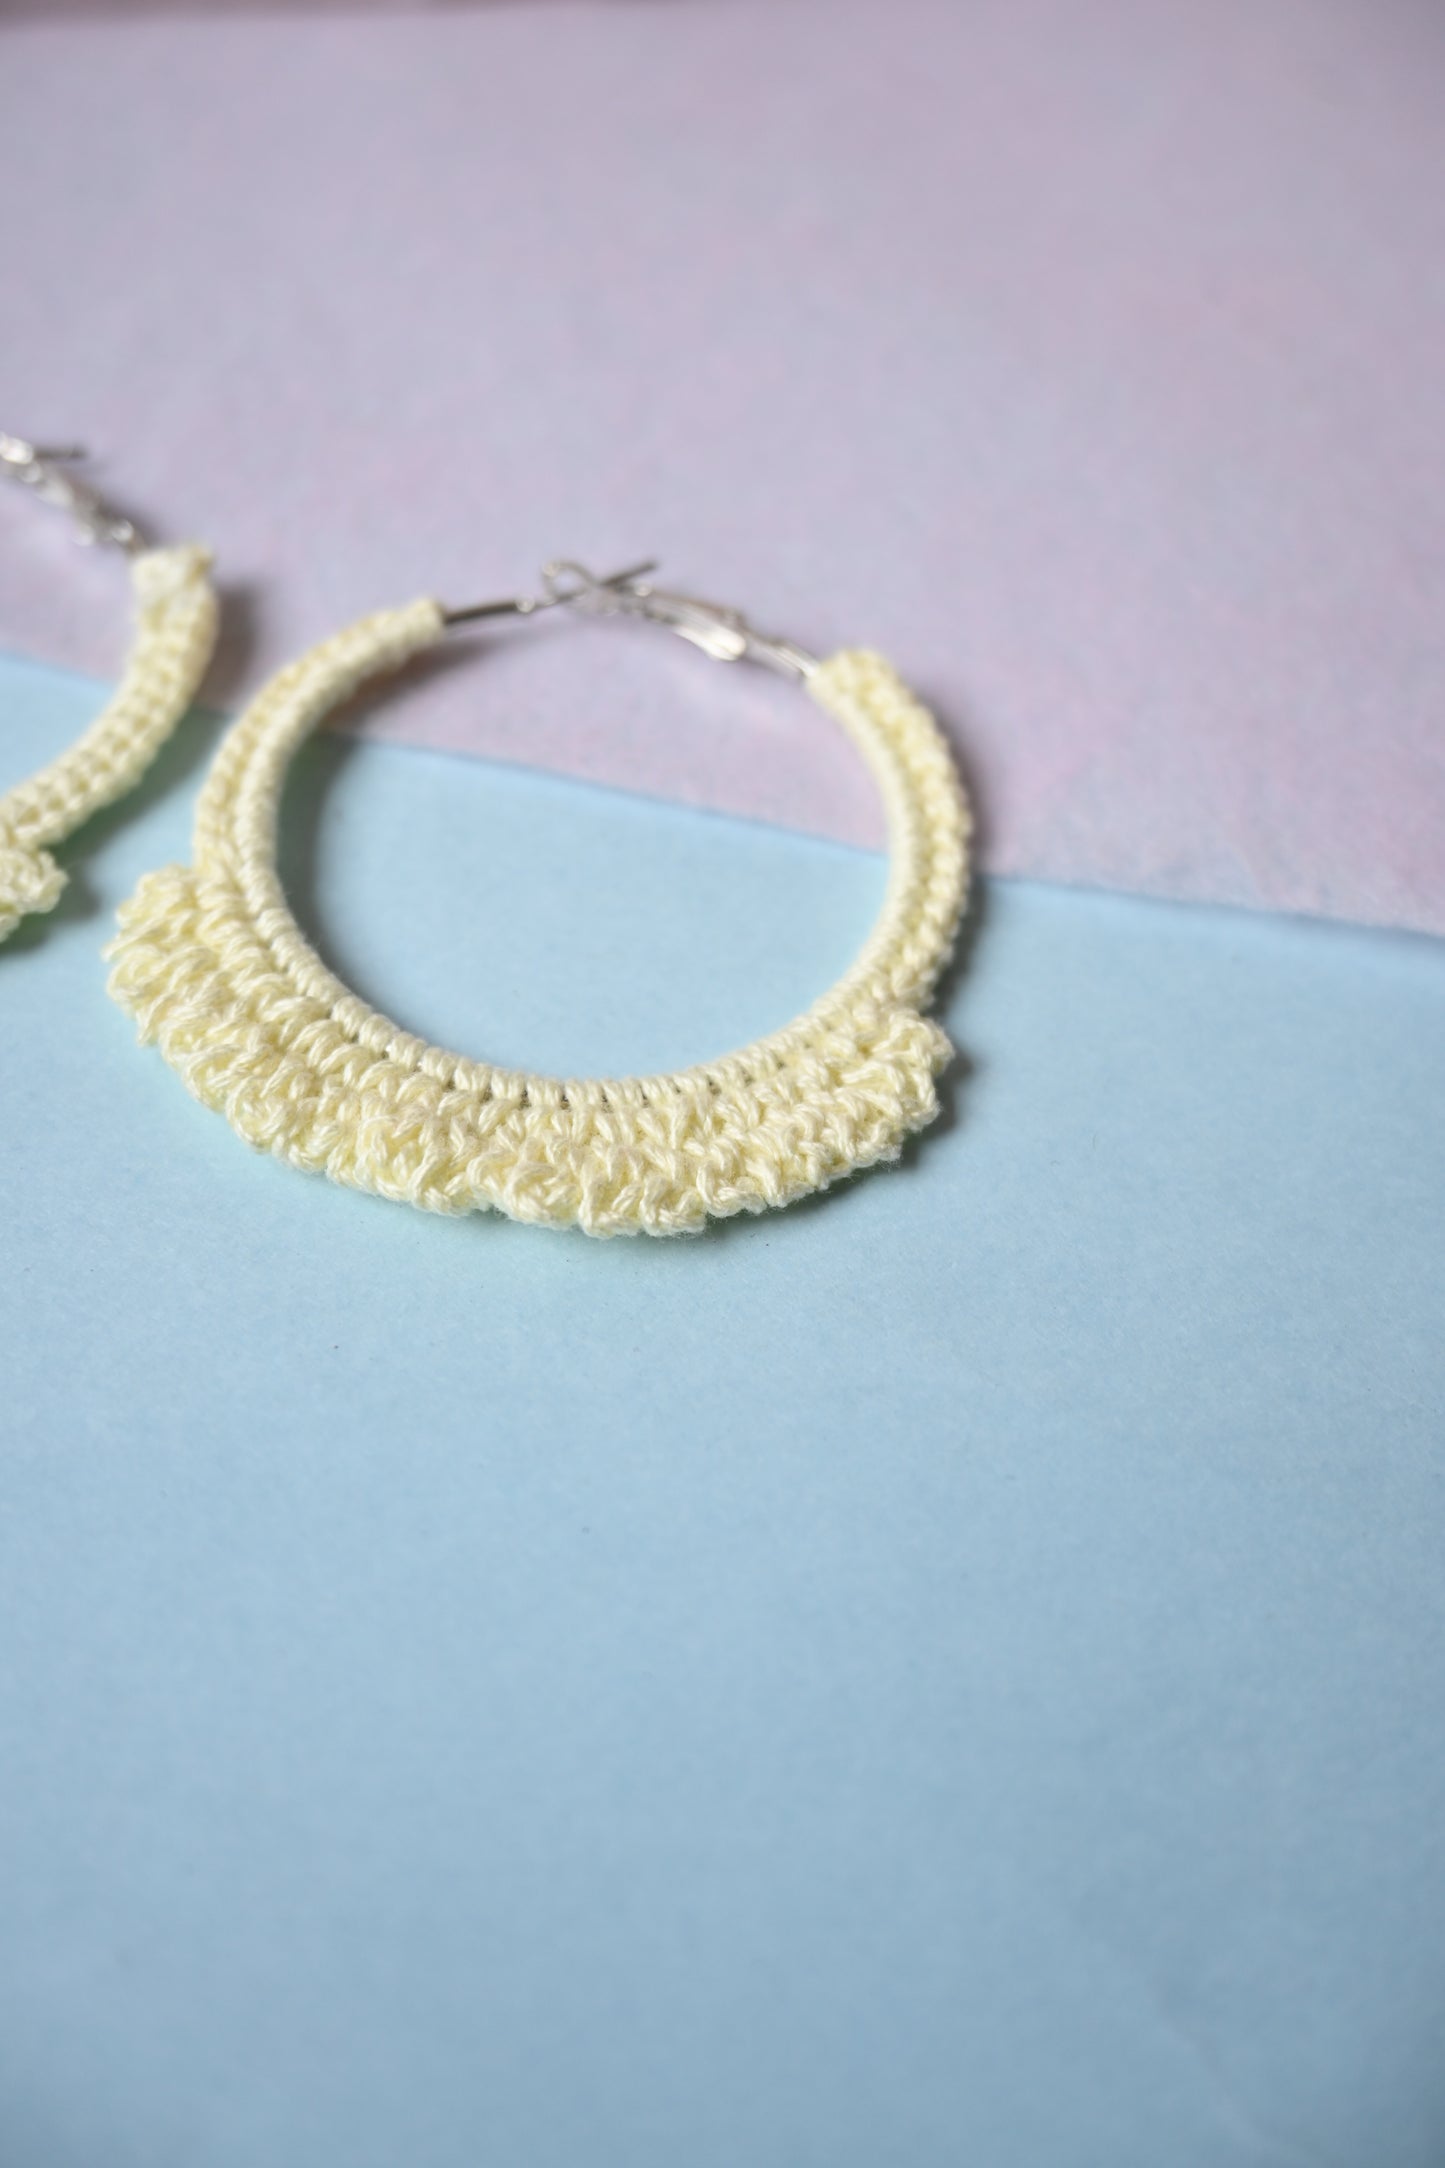 Off white crochet earrings